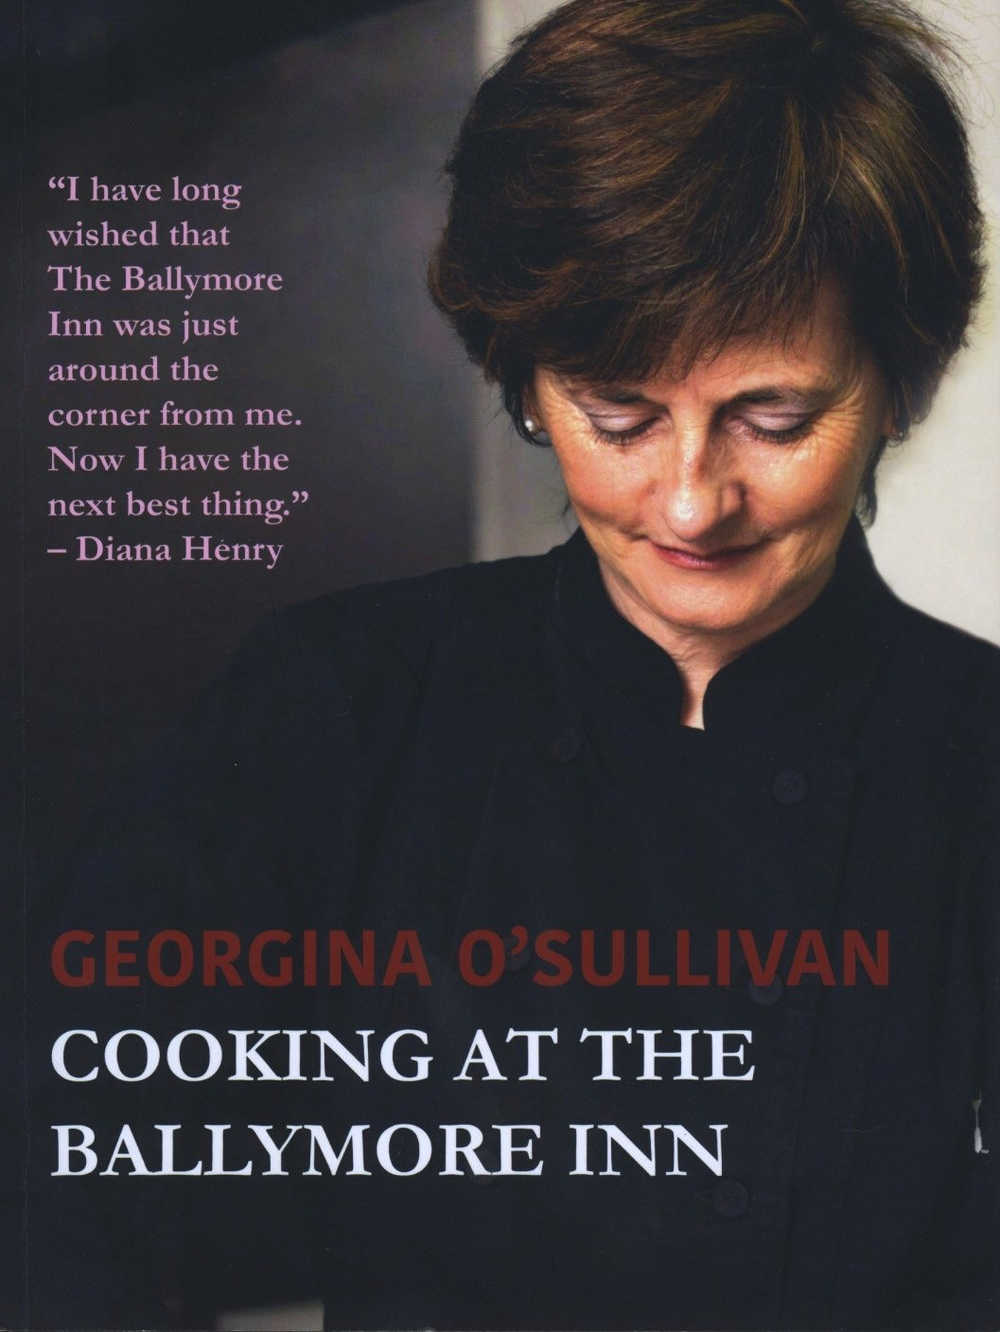 Georgina O'Sullivan Cooking At The Ballymore Inn (Estragon Press, paperback; €20 + p&p http://www.ballymoreinn.com/book-offer)